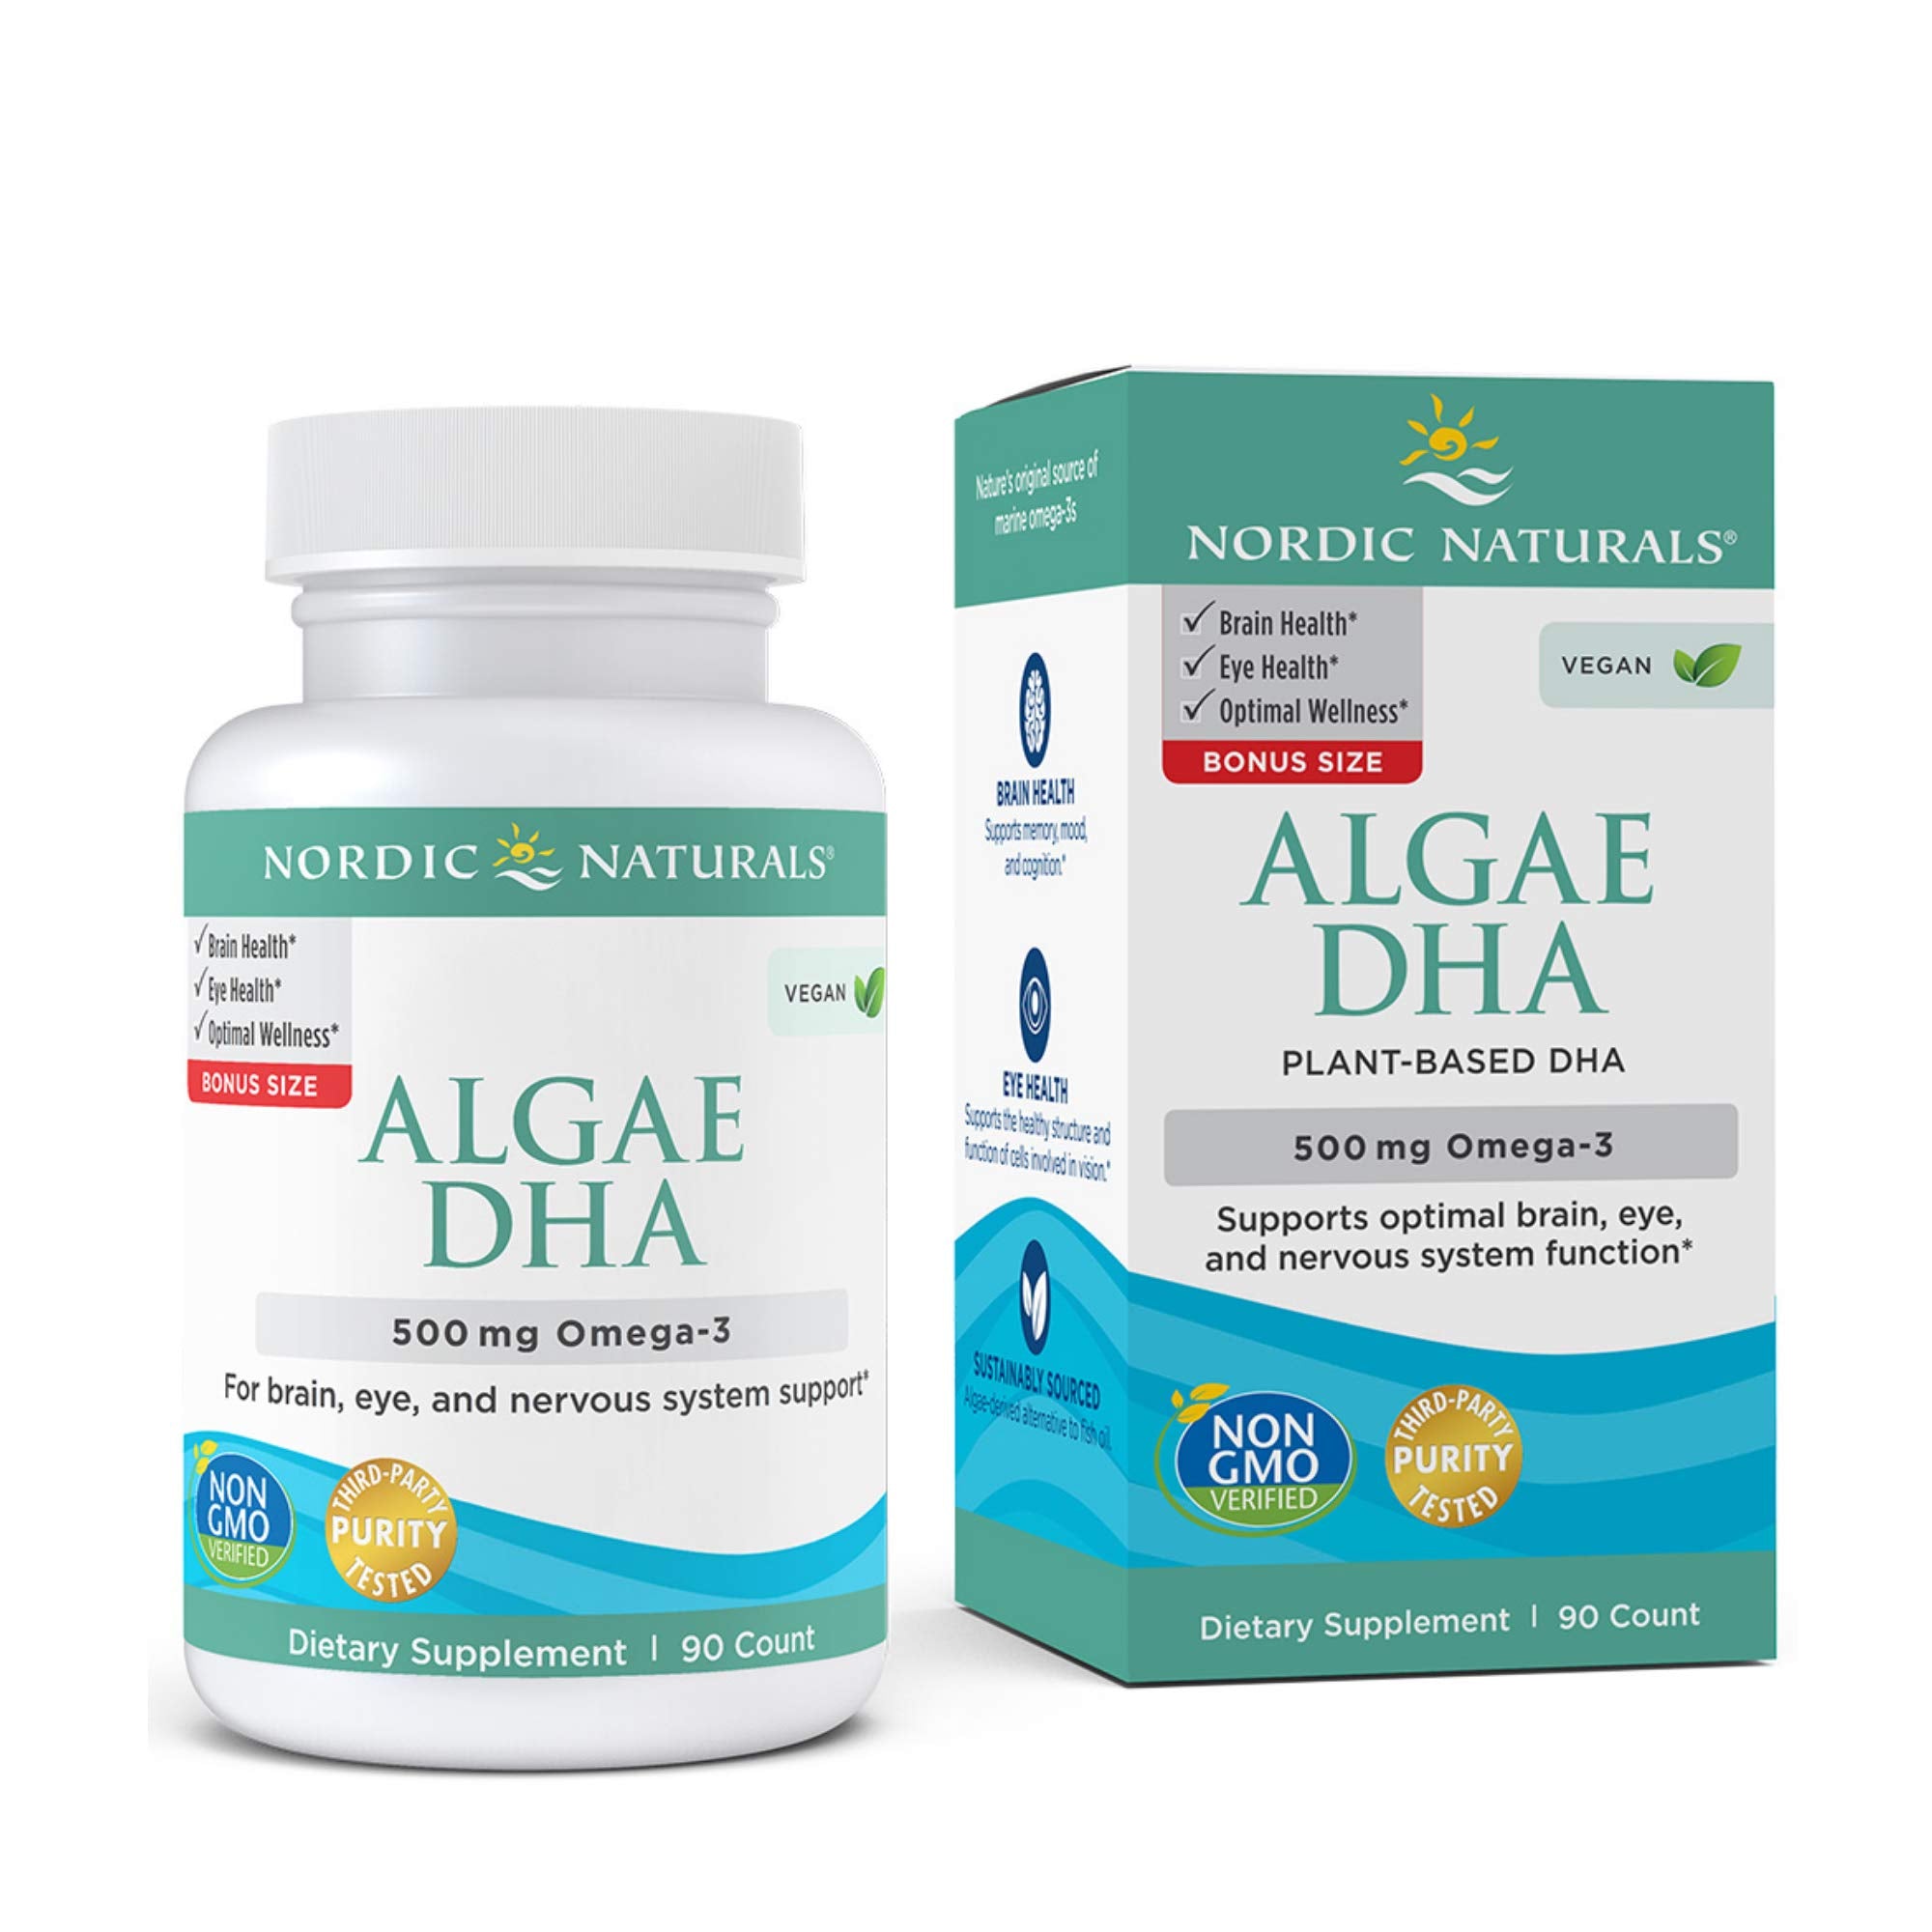 Nordic Naturals Algae DHA - 500 mg Omega-3 DHA - 90 Soft Gels - Certified Vegan Algae Oil - Plant-Based DHA - Brain, Eye & Nervous System Support - Non-GMO - 45 Servings